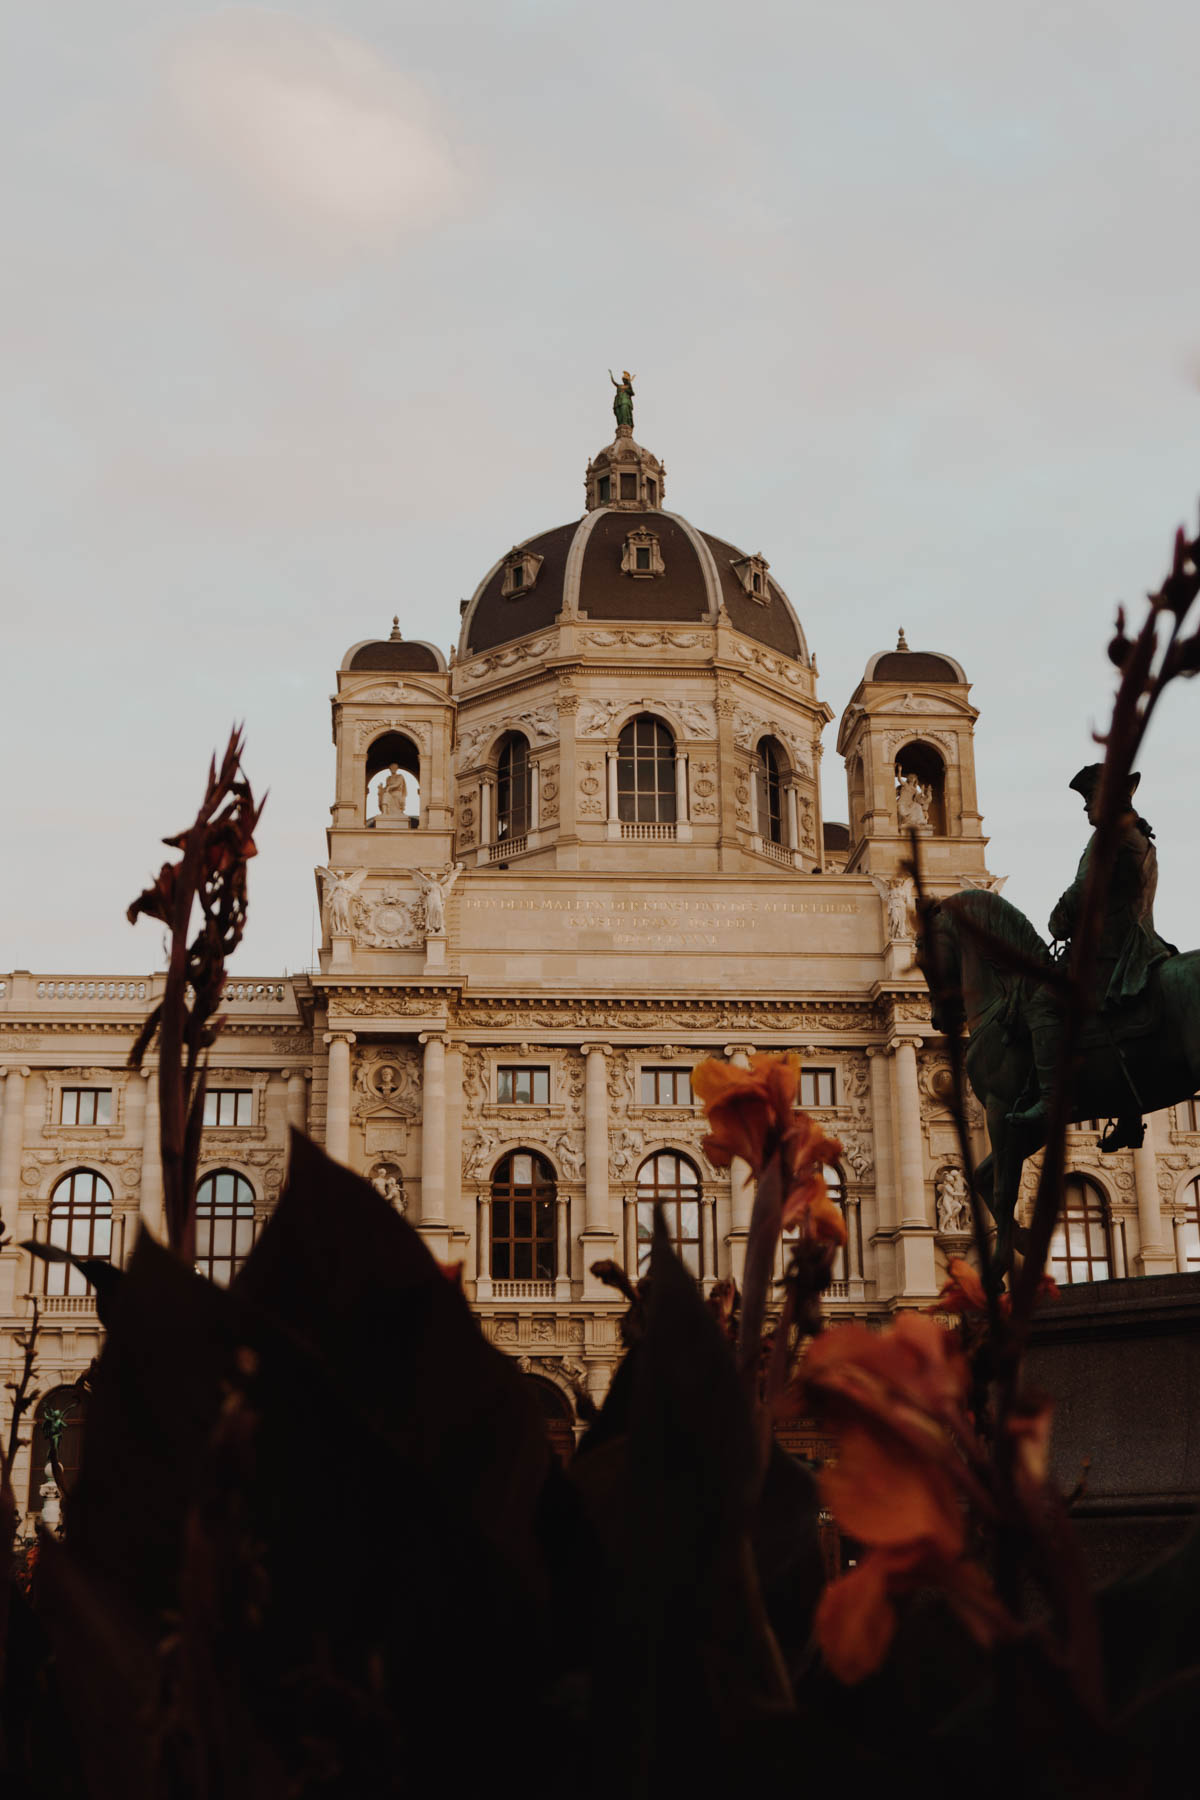 Vienna Austria Travel Guide - Architecture // RG Daily Blog